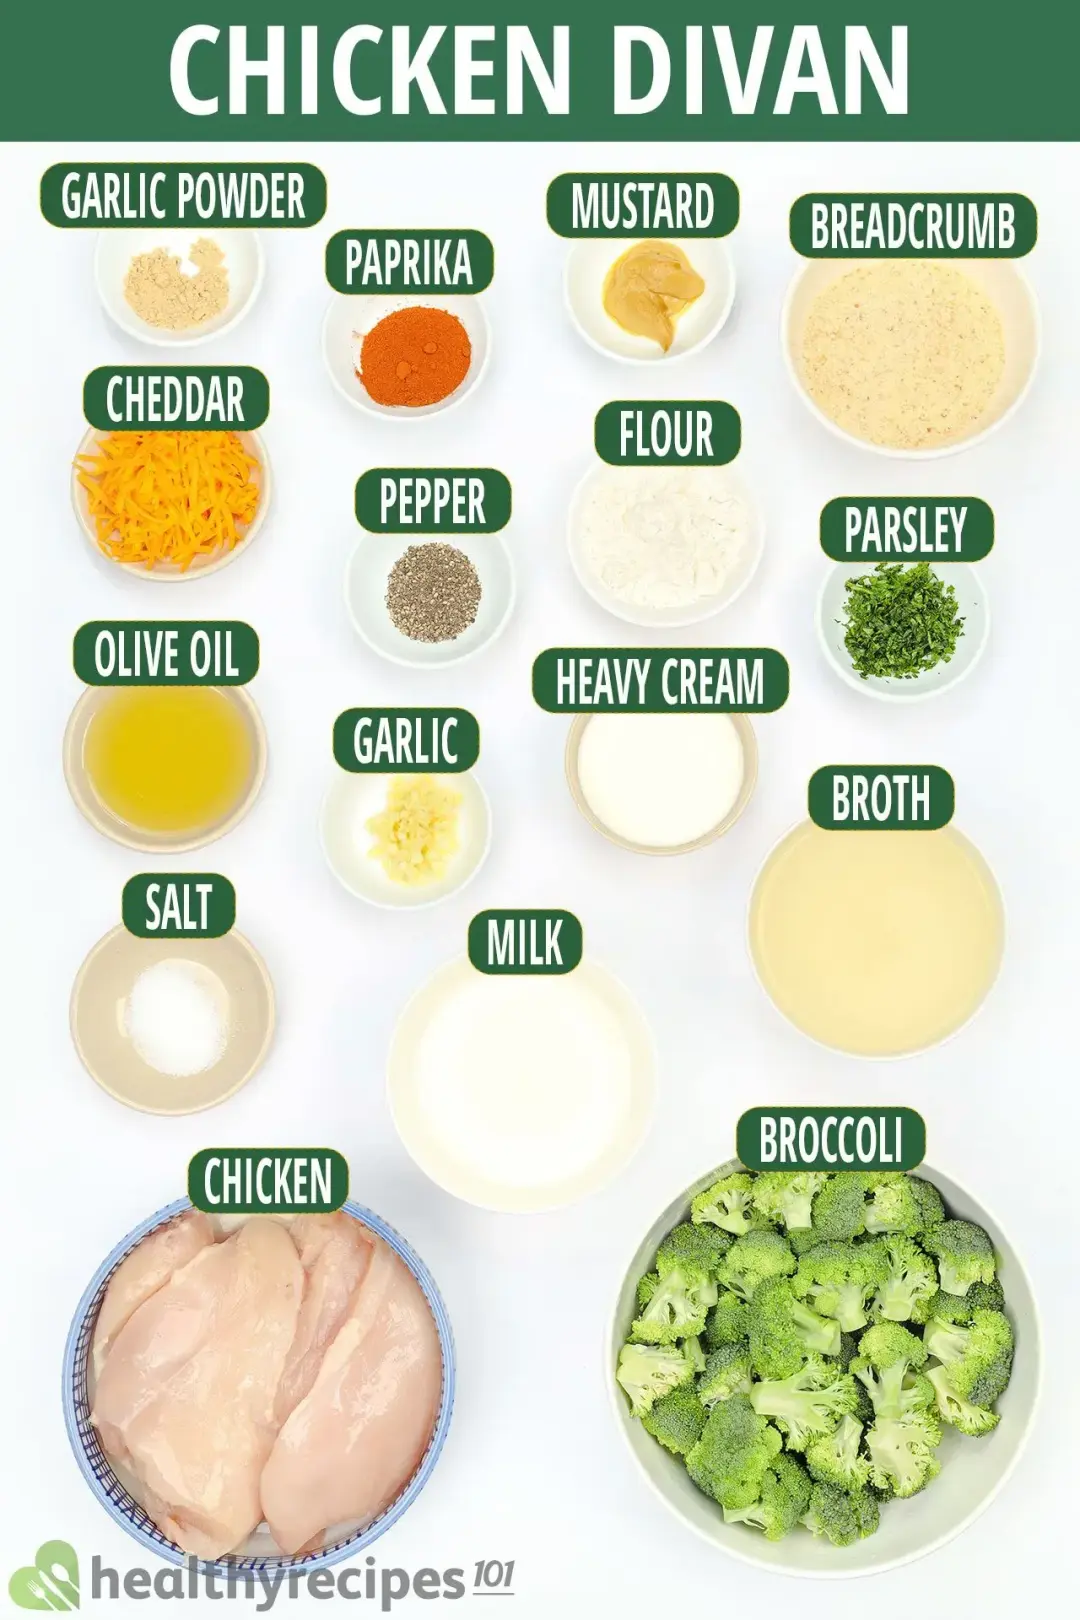 Ingredients for Chicken Divan